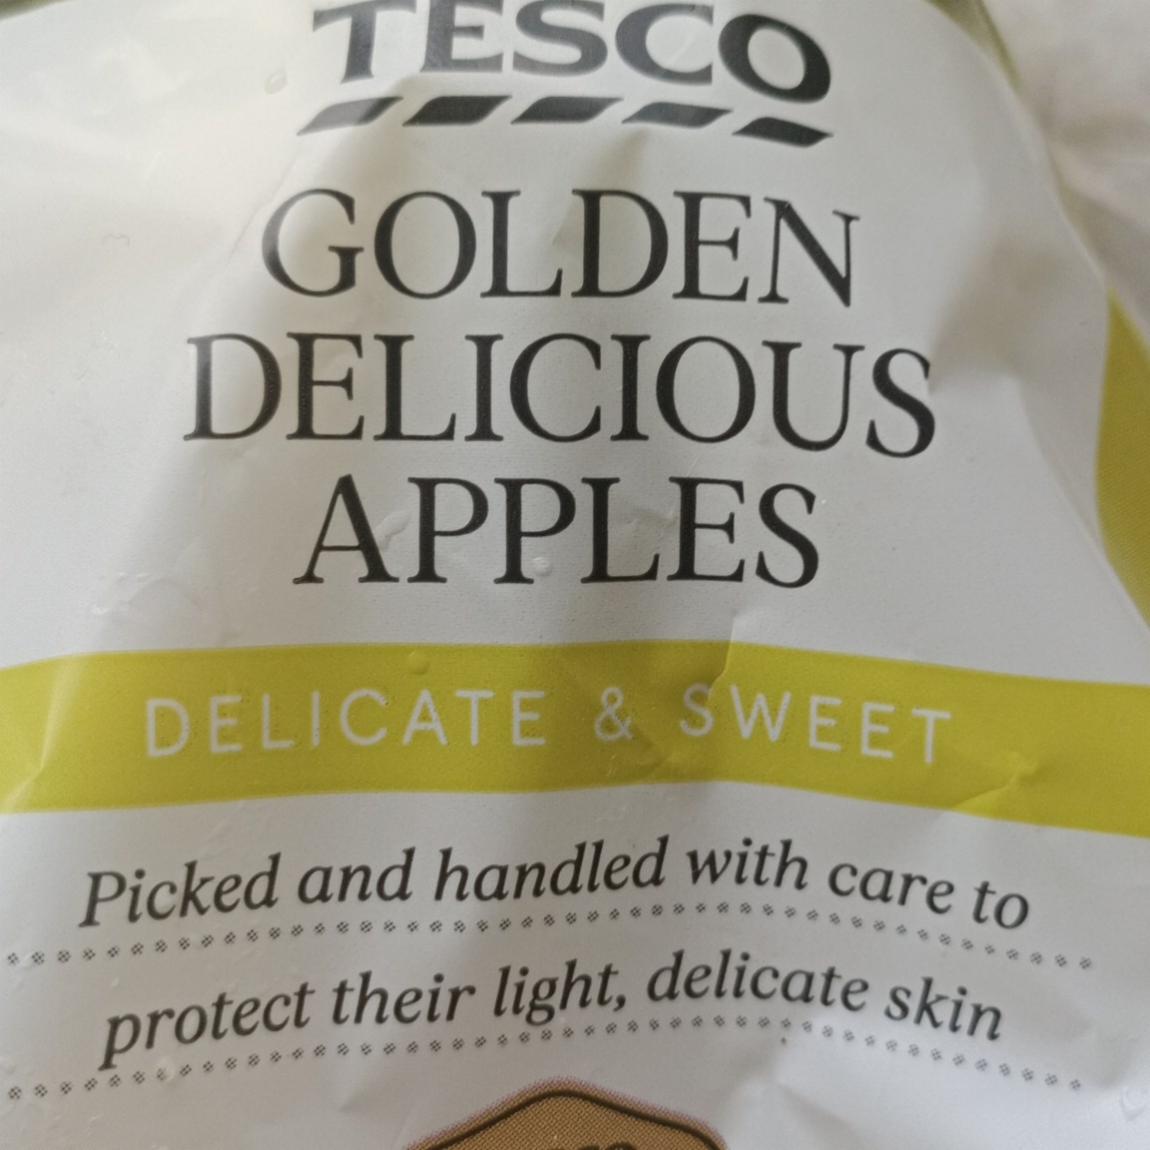 Fotografie - Golden delicious apples Tesco